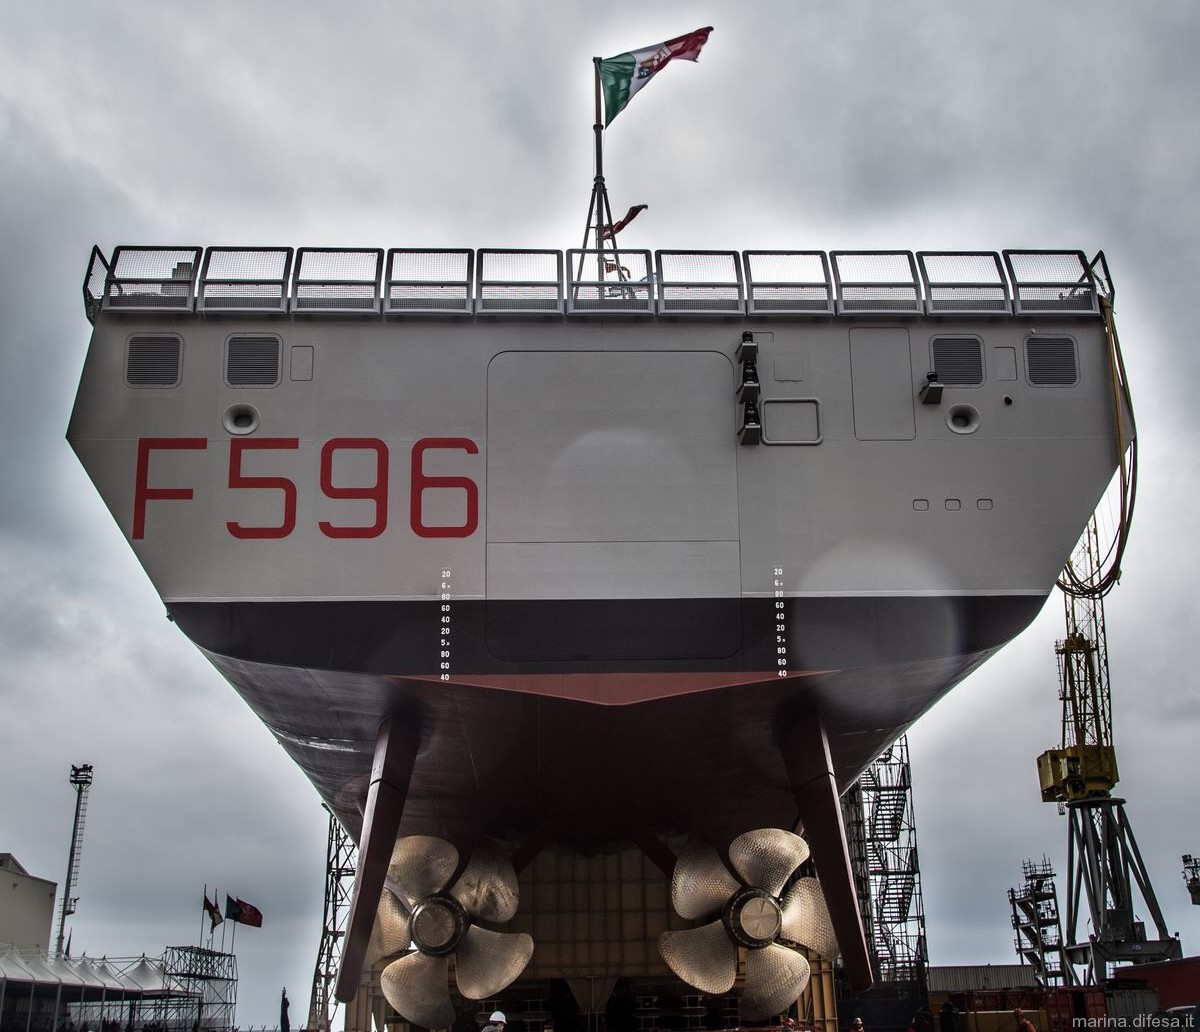 f-596 federico martinengo its nave bergamini fremm class guided missile frigate italian navy marina militare 15